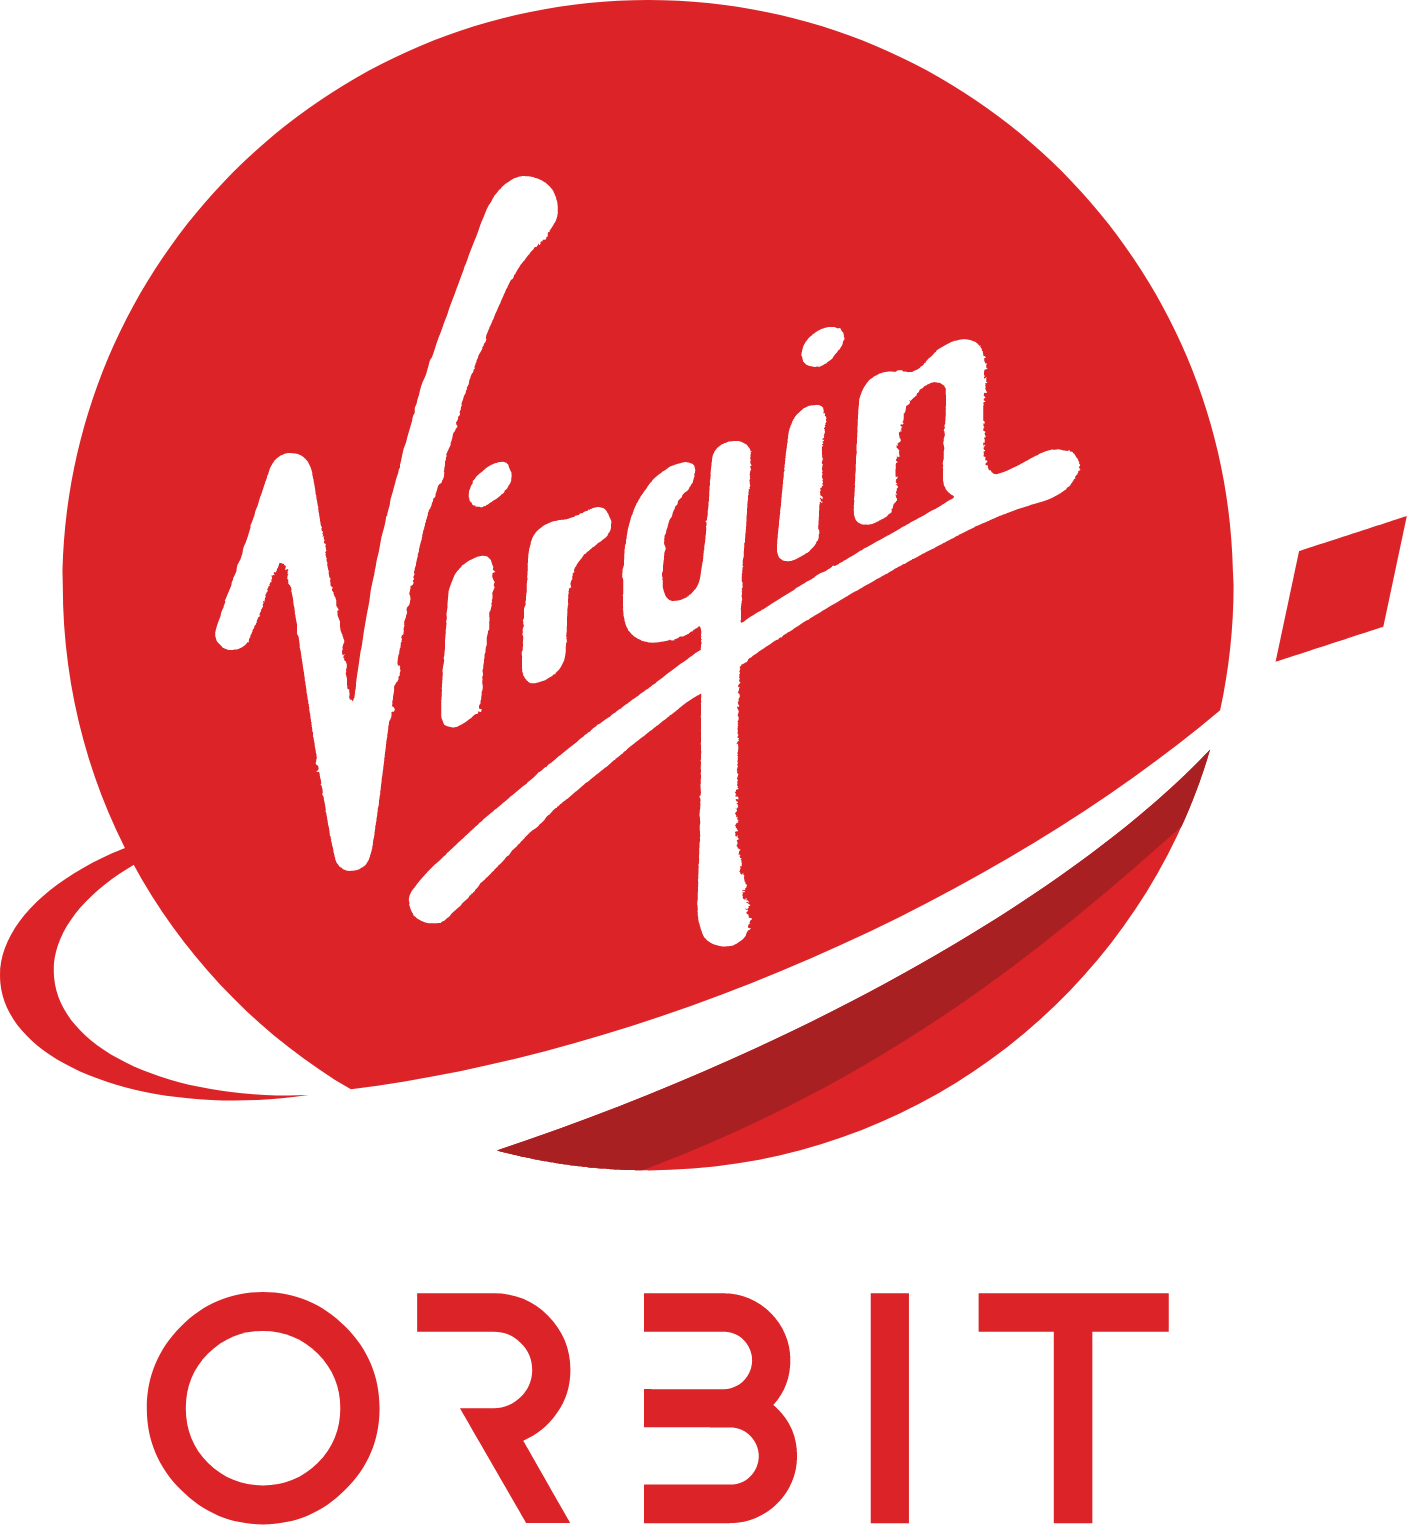 Virgin Orbit logo large (transparent PNG)